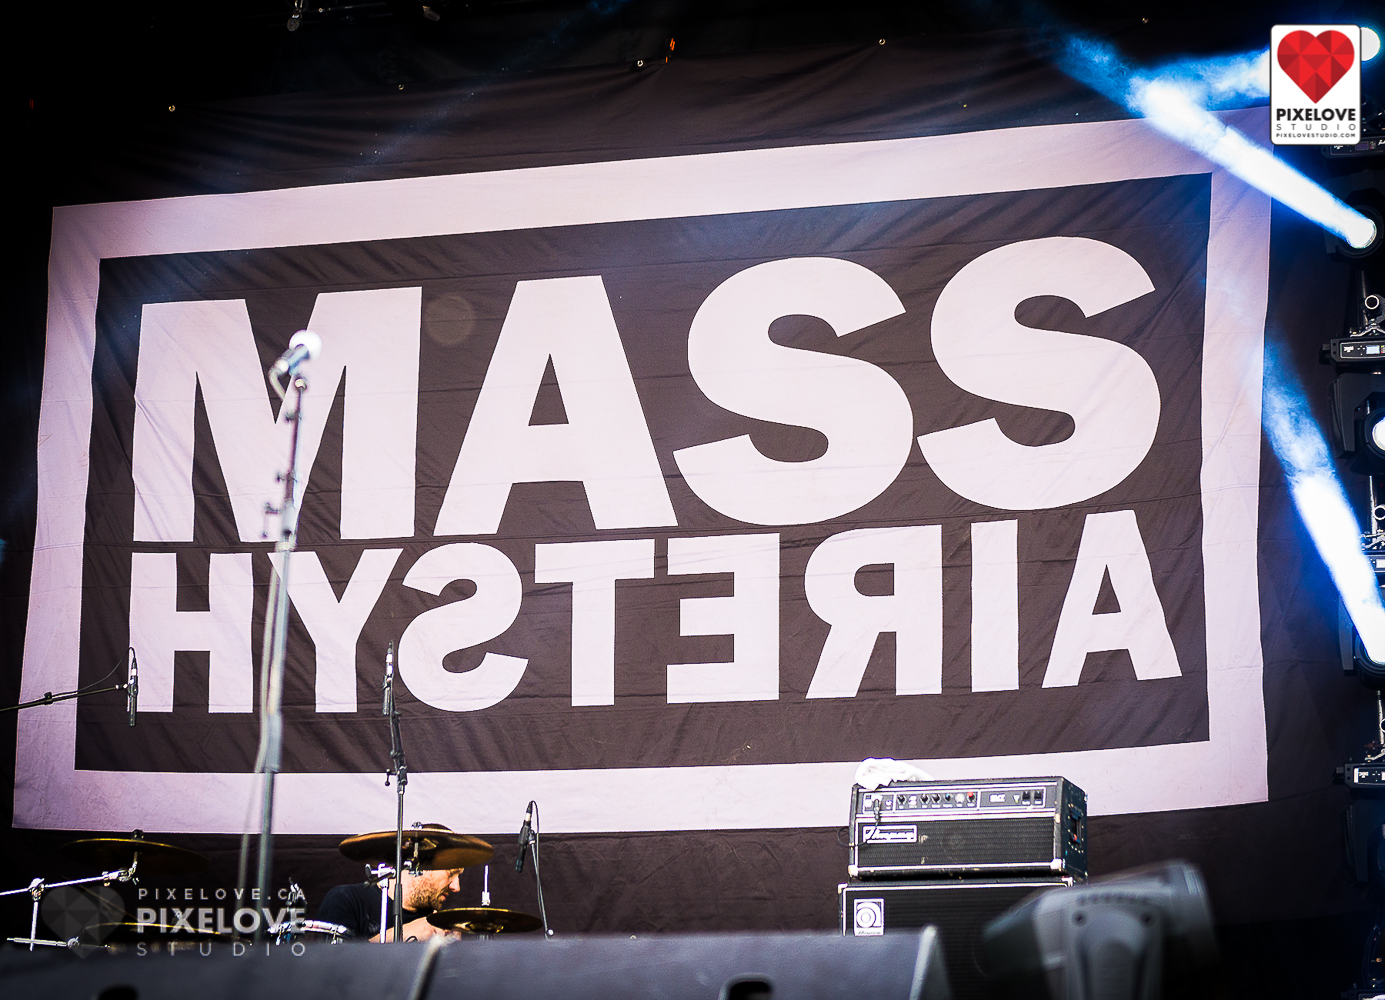 Heavy Montreal 2014 heavy metal music festival at Parc Jean-Drapeau.